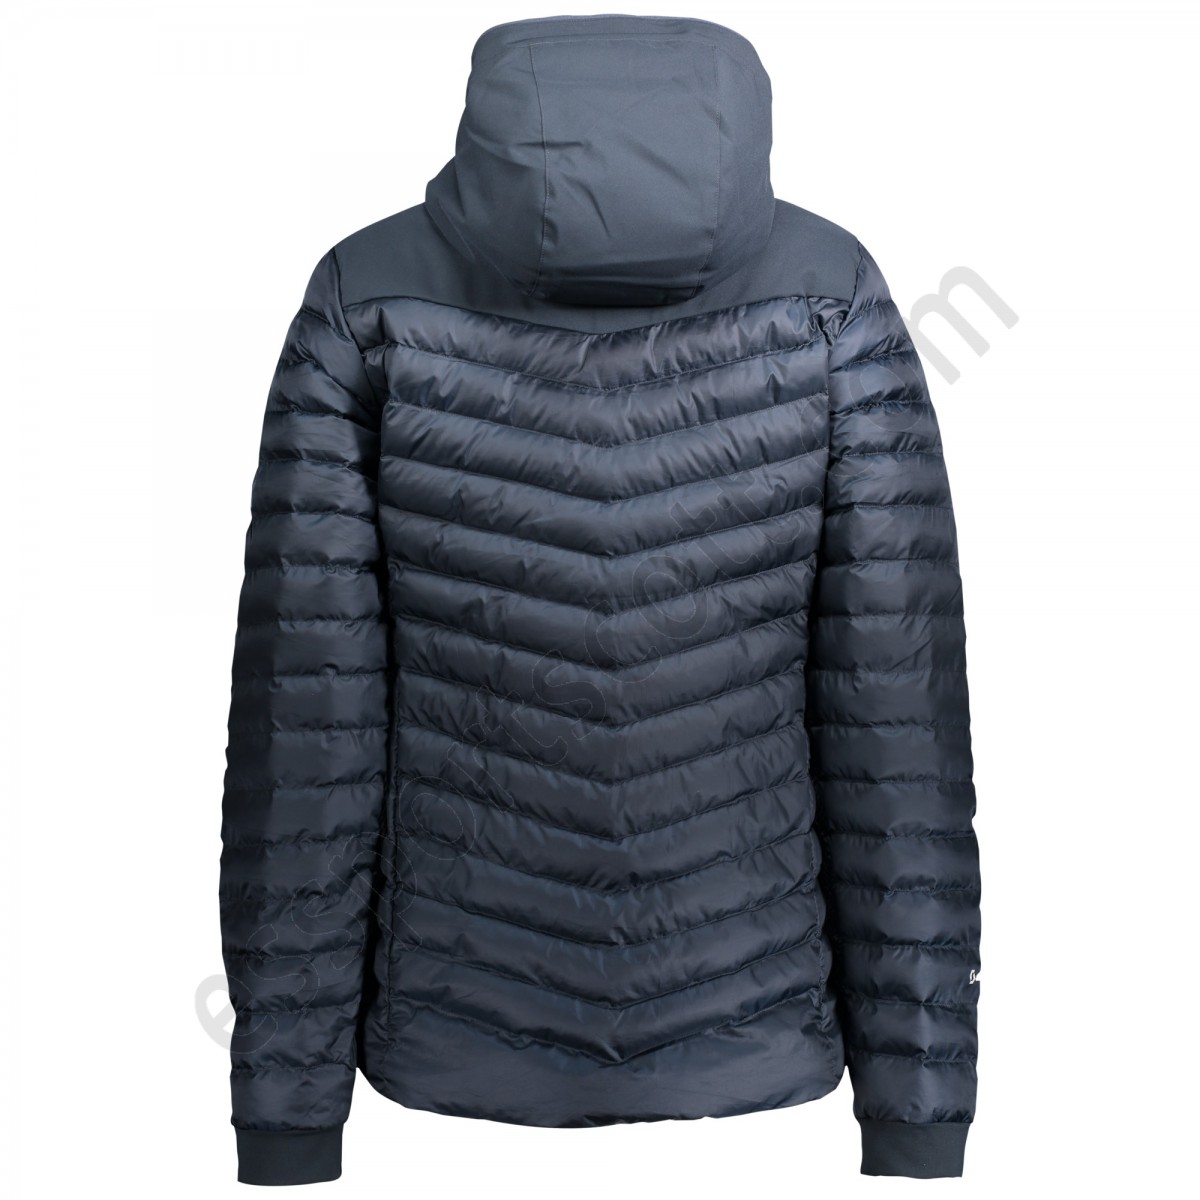 Scott Tienda ◇ Insuloft Warm Women's Jacket - -1